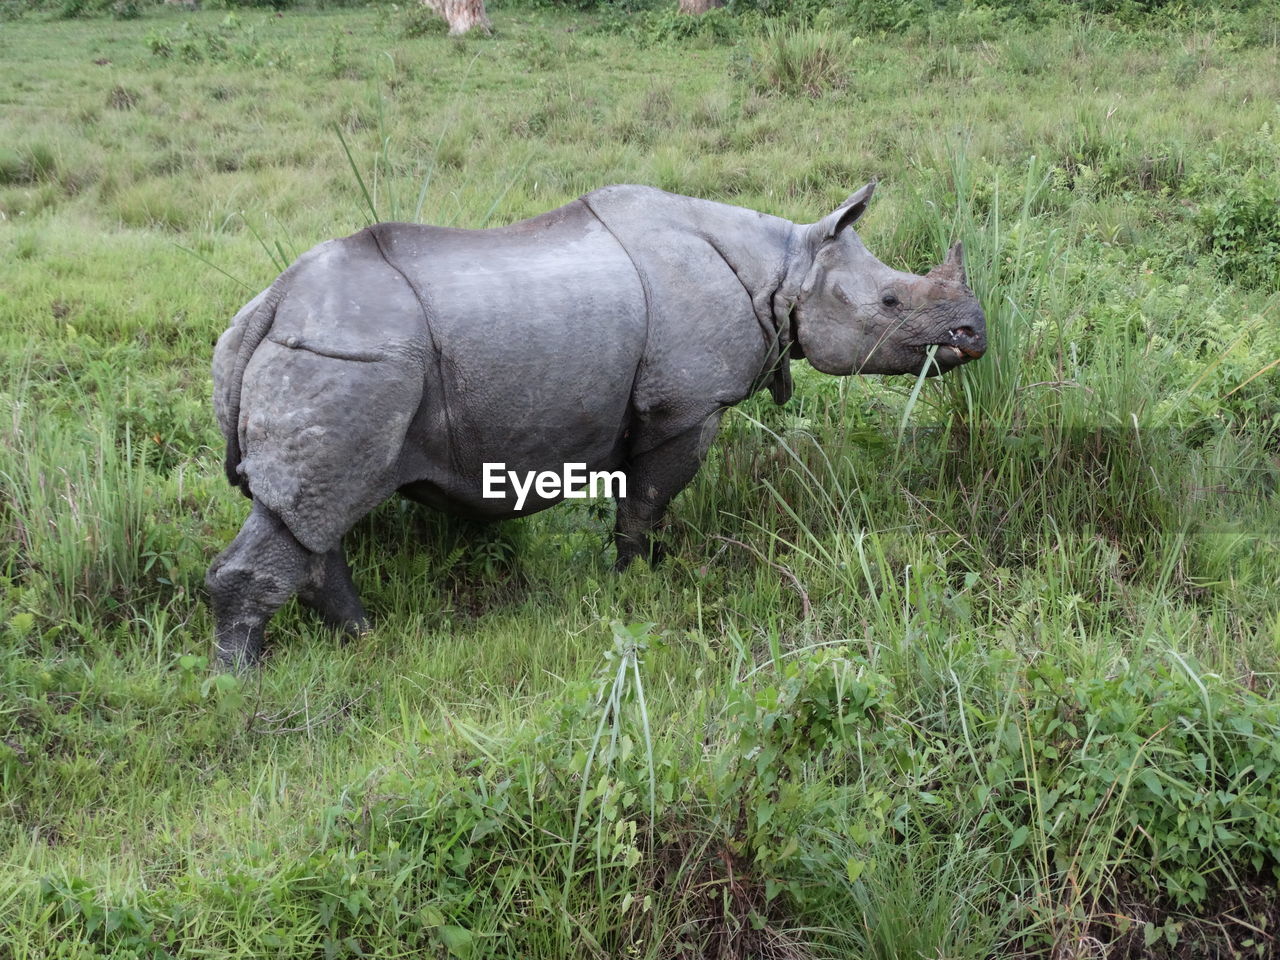 An indian rhinoceros at jaldapara wildlife sanctuary, west bengal, india